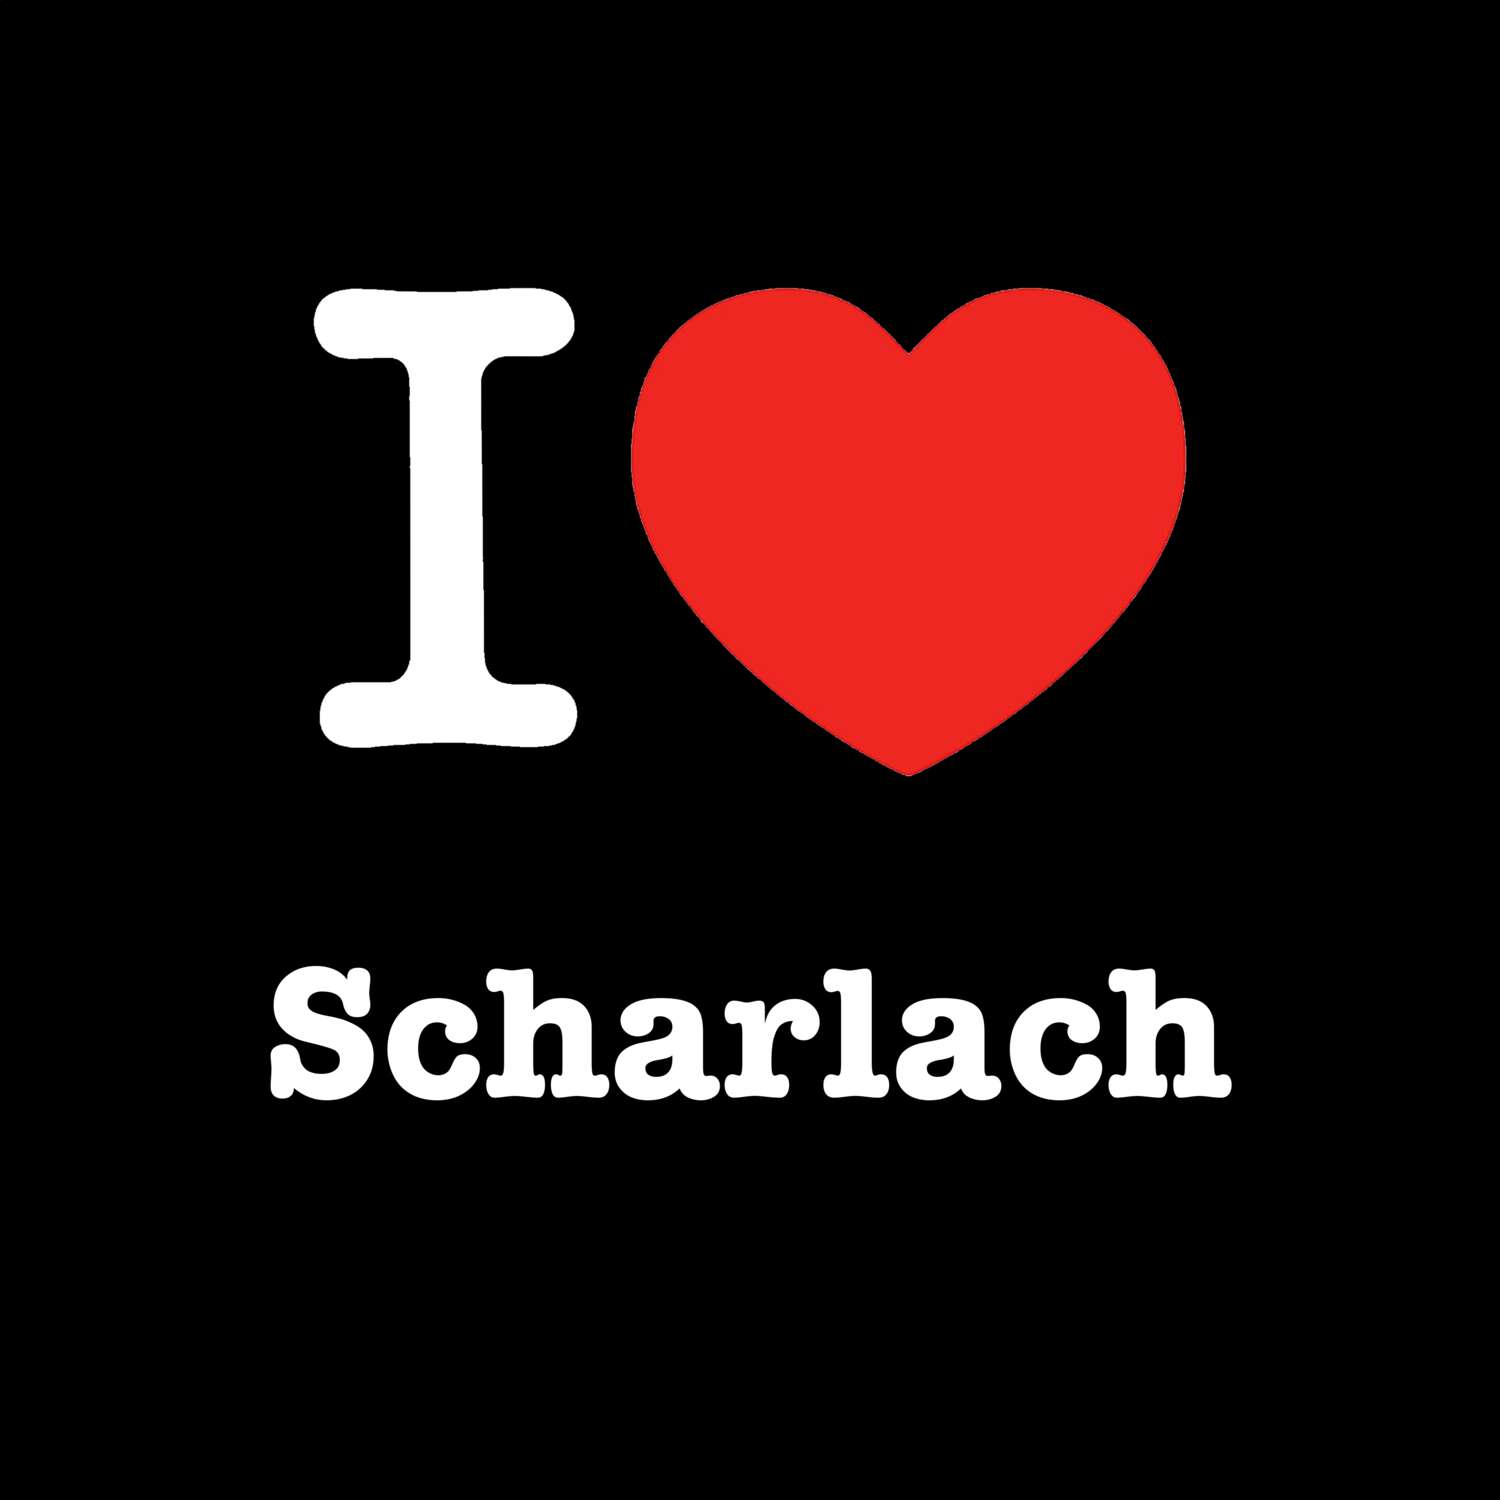 Scharlach T-Shirt »I love«